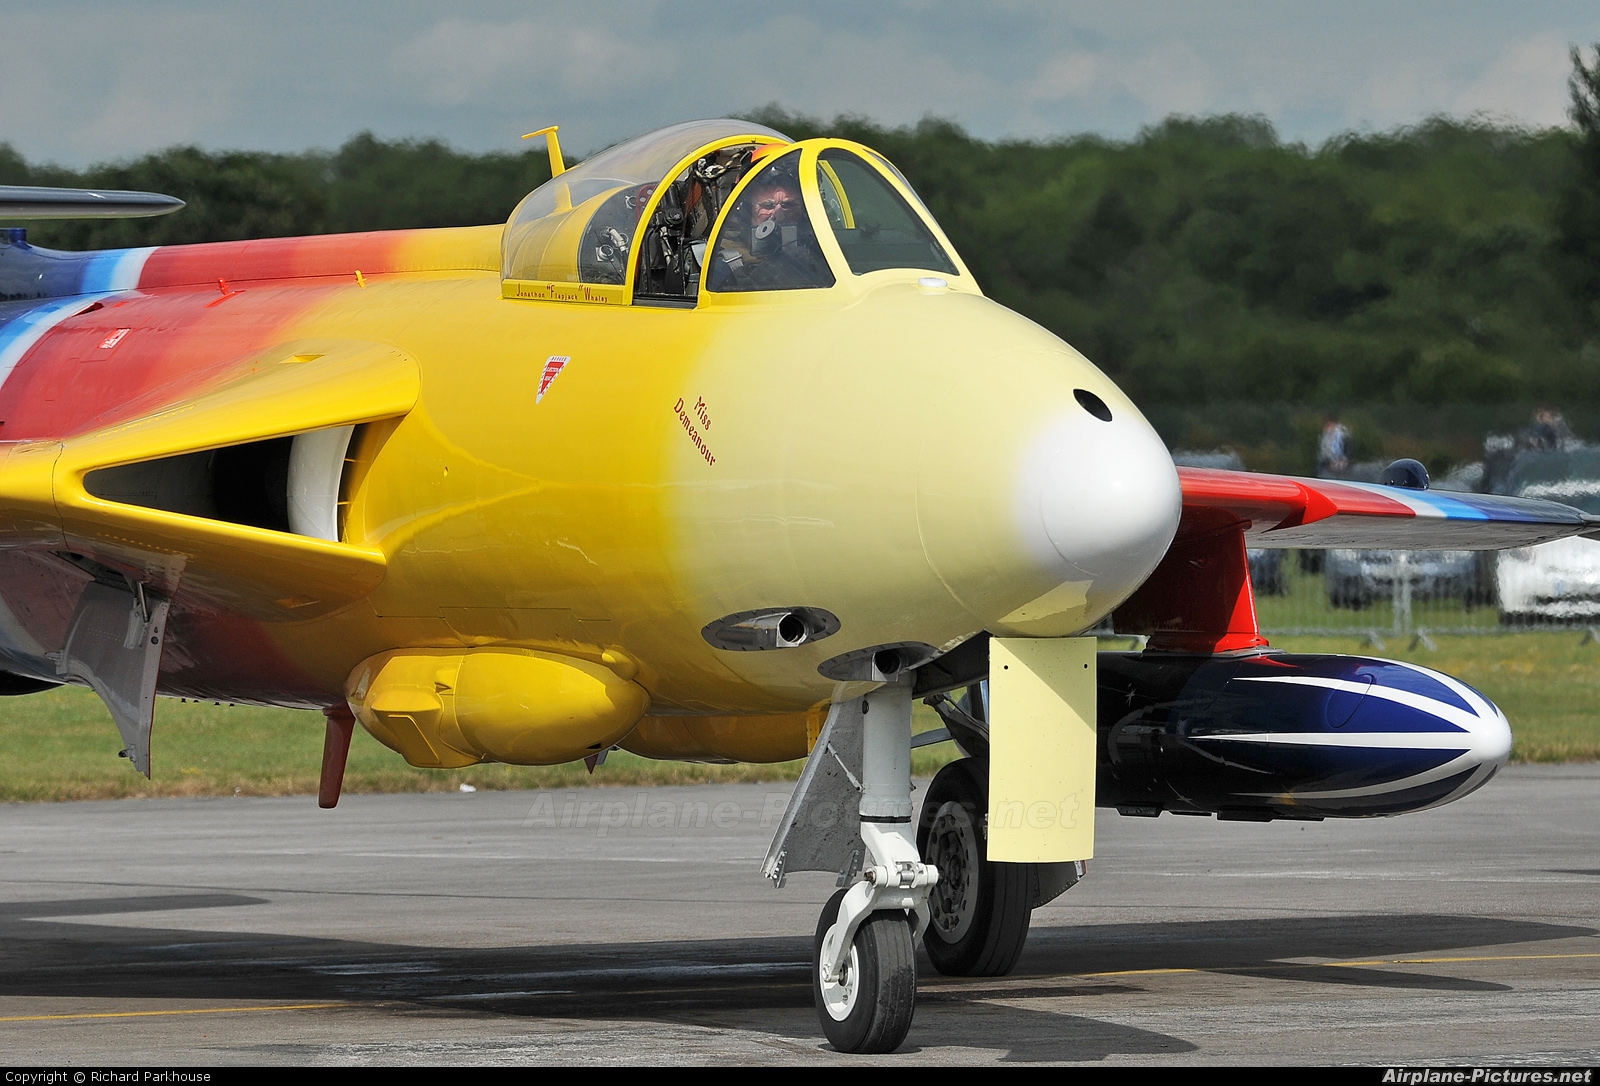 Heritage Aviation Developments G-PSST aircraft at Kemble